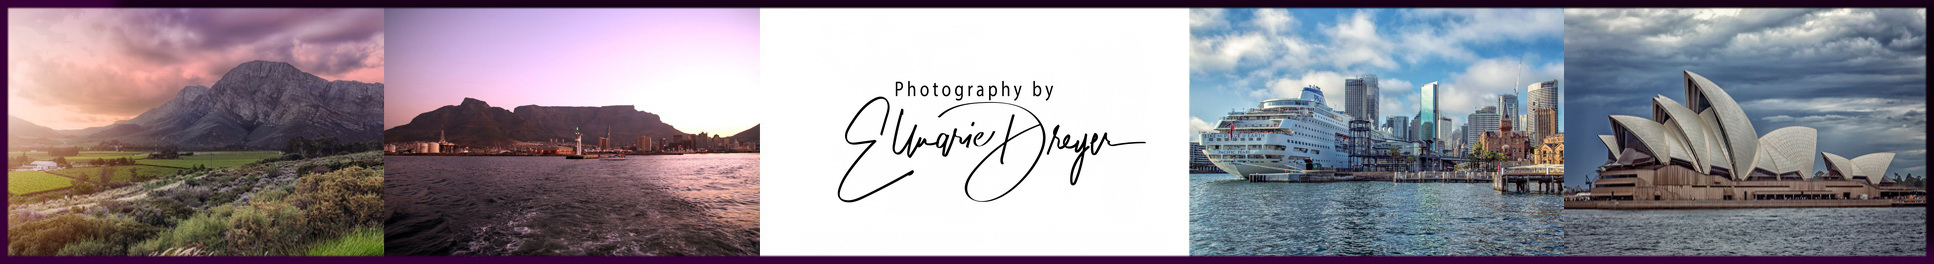 Elmarie Dreyer Photography